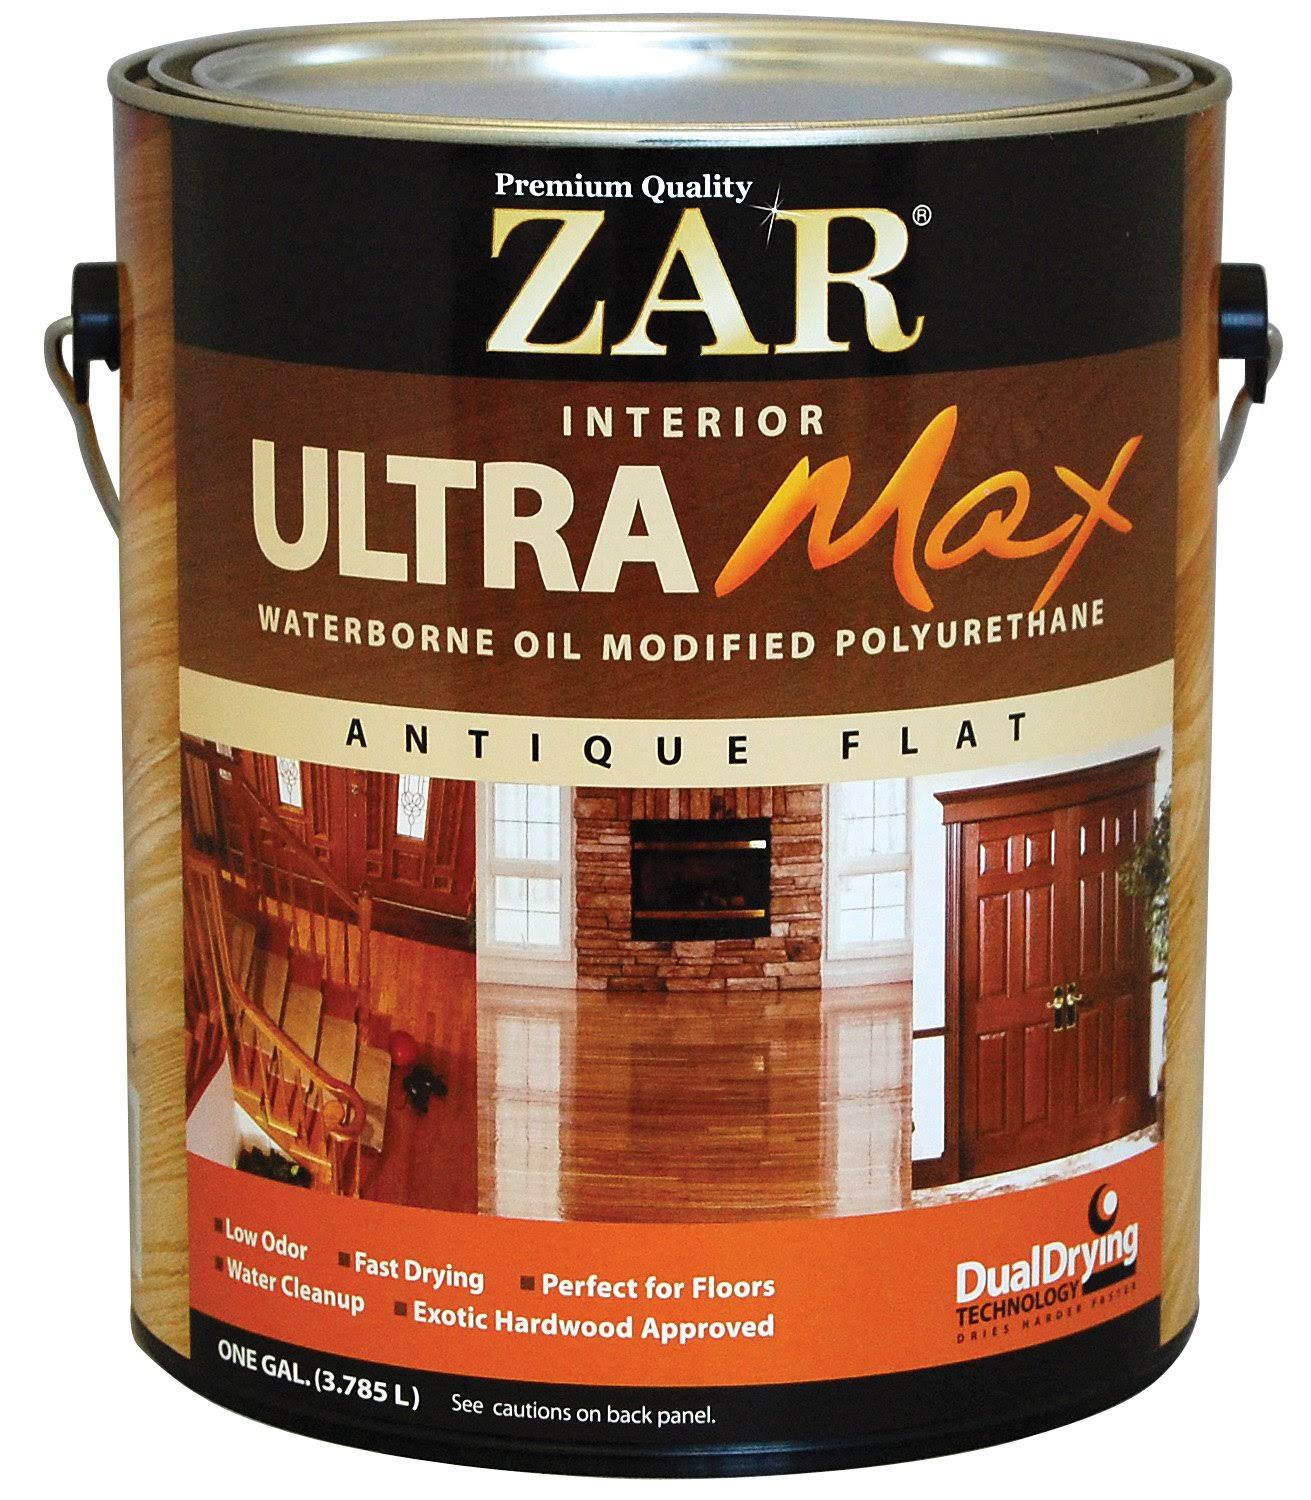 Zar Interior Ultra Max Water Oil Modified Polyurethane - Antique Flat